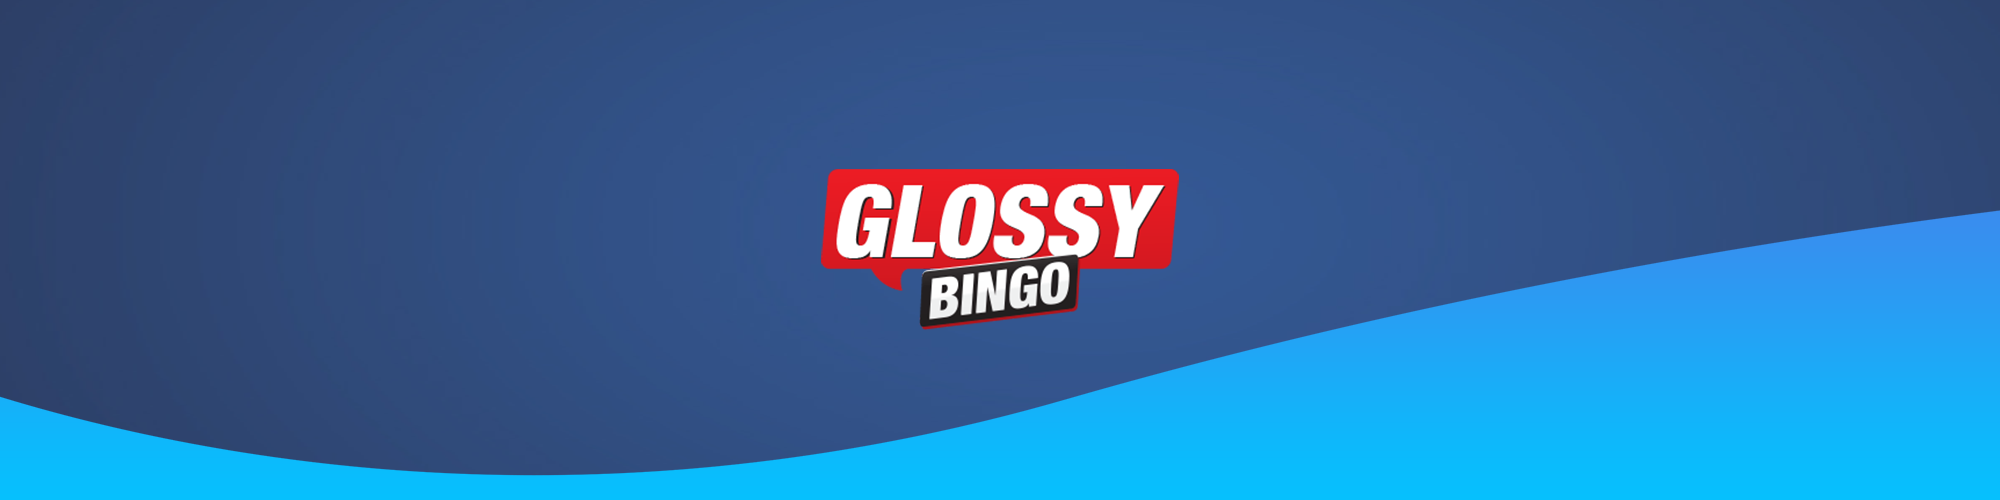 Glossy Bingo Alternative on EazeGames